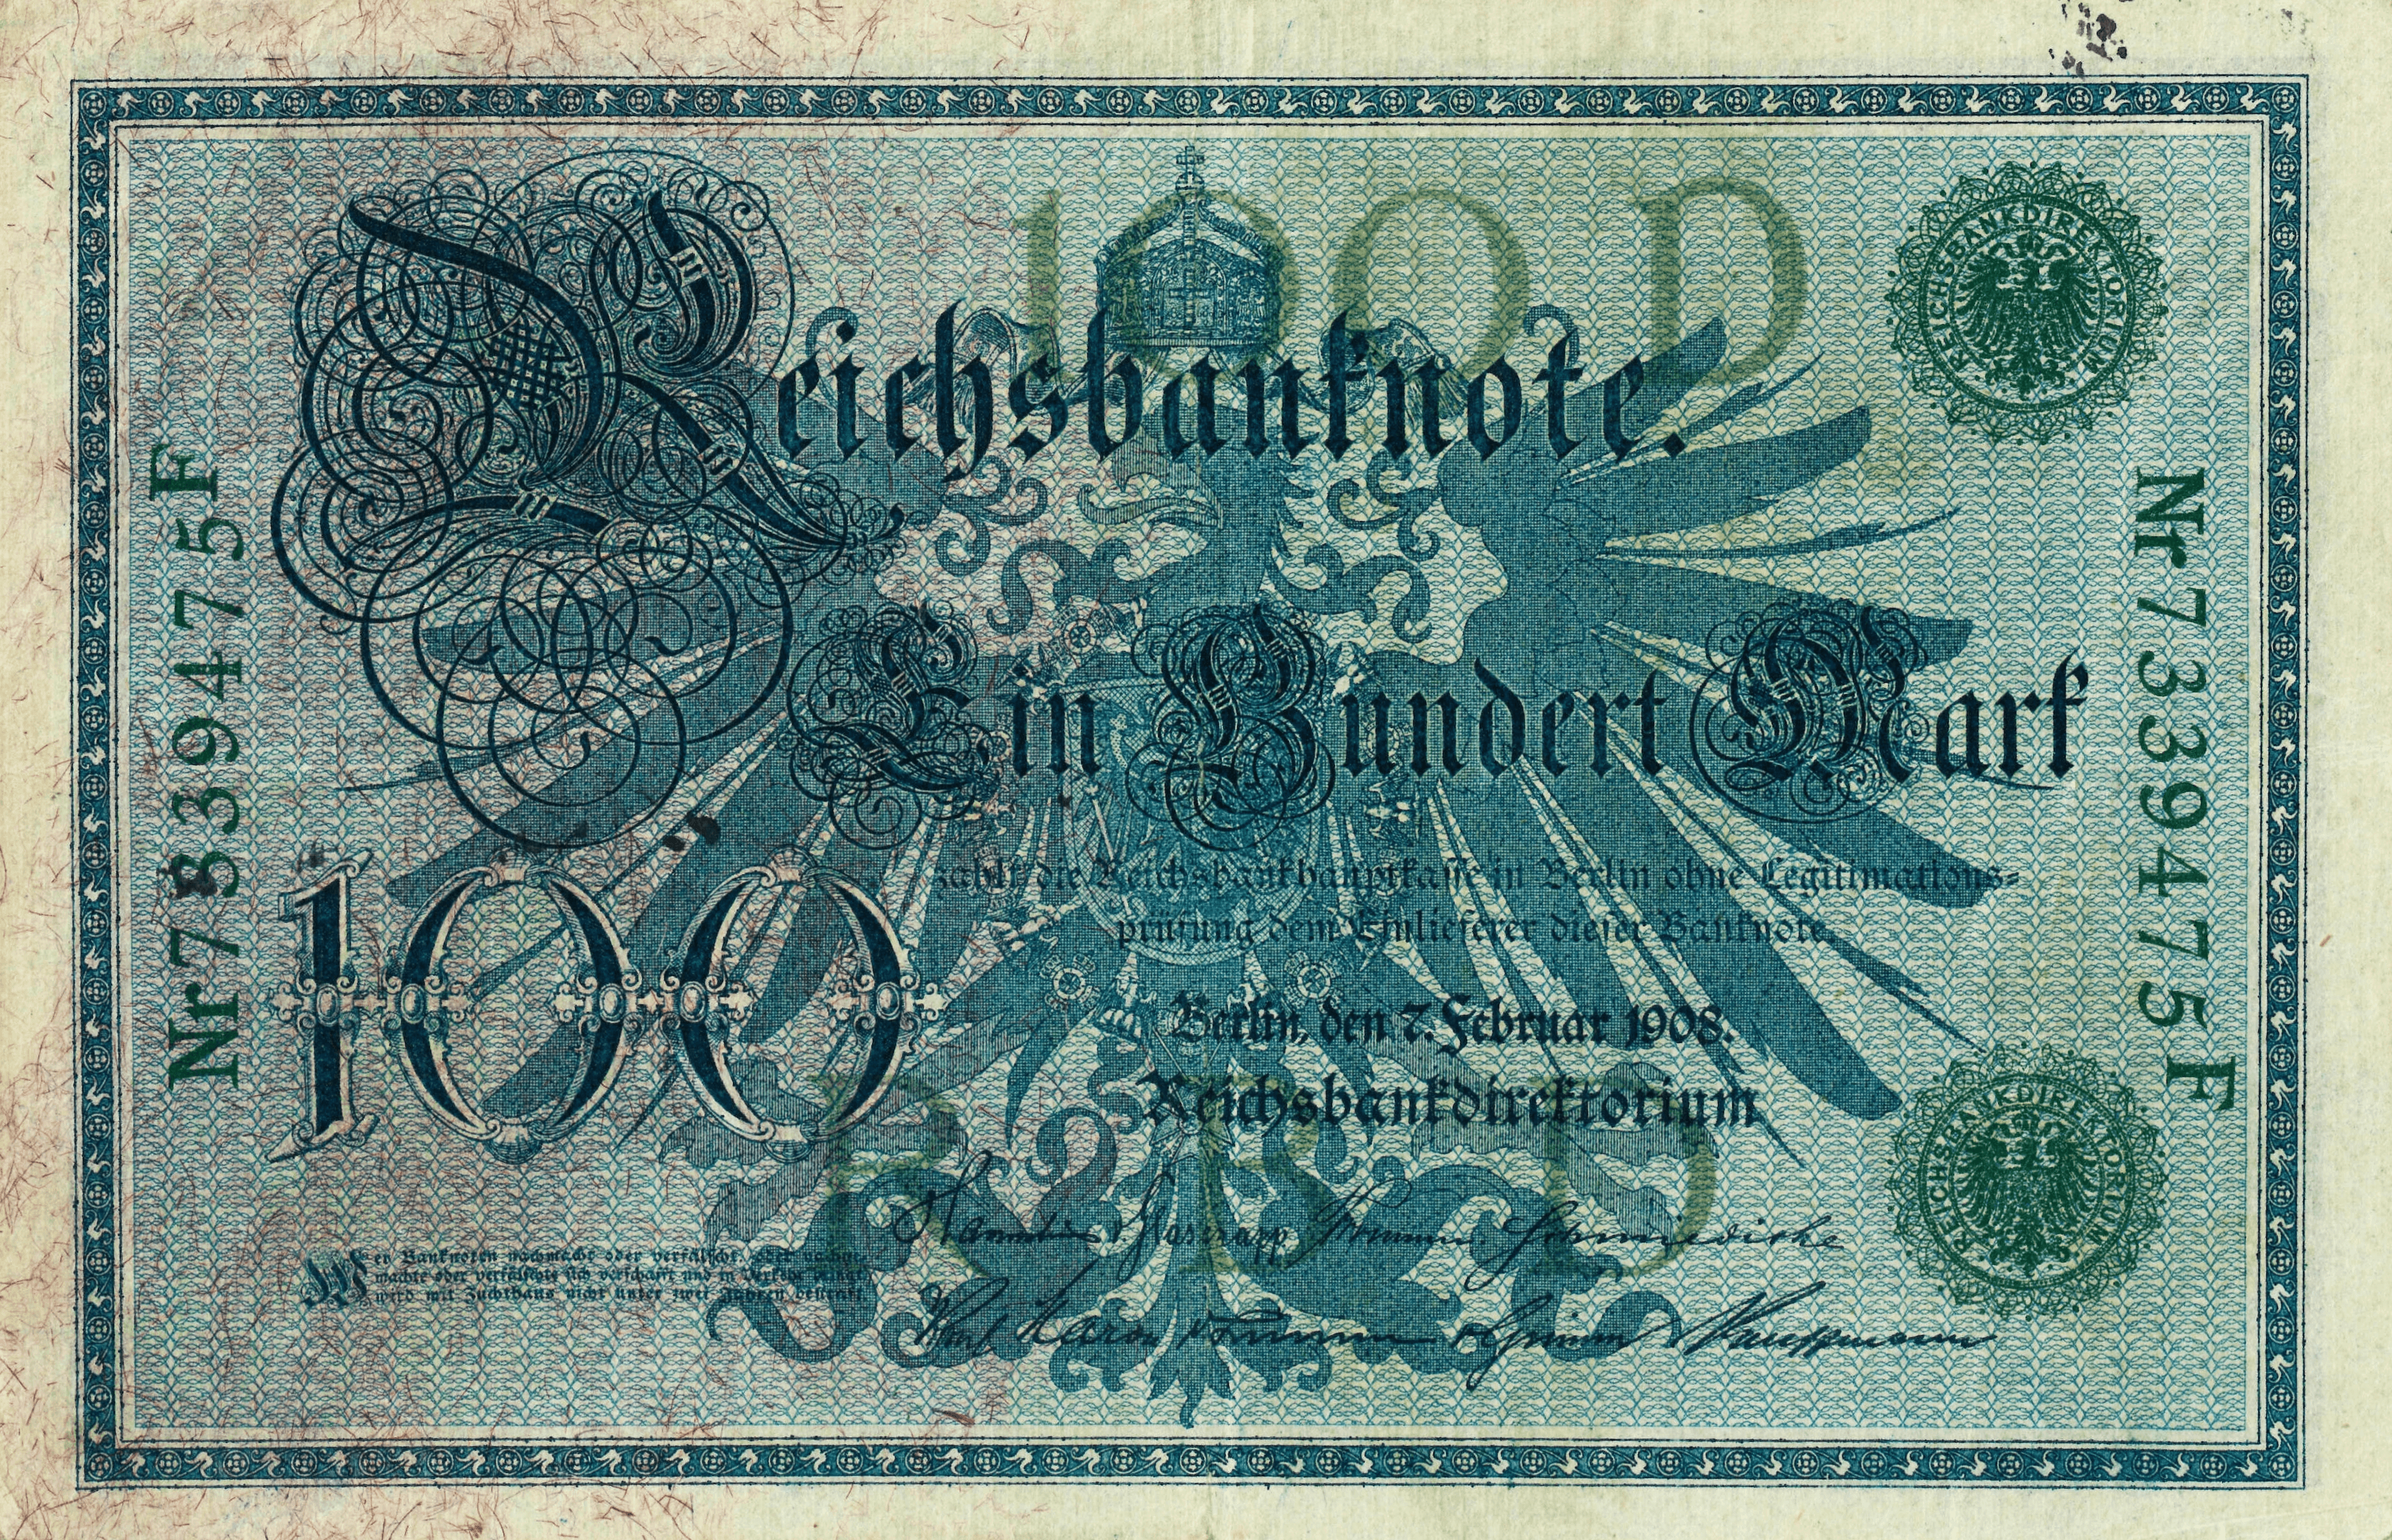 The Reichsbank 100 Mark Note I